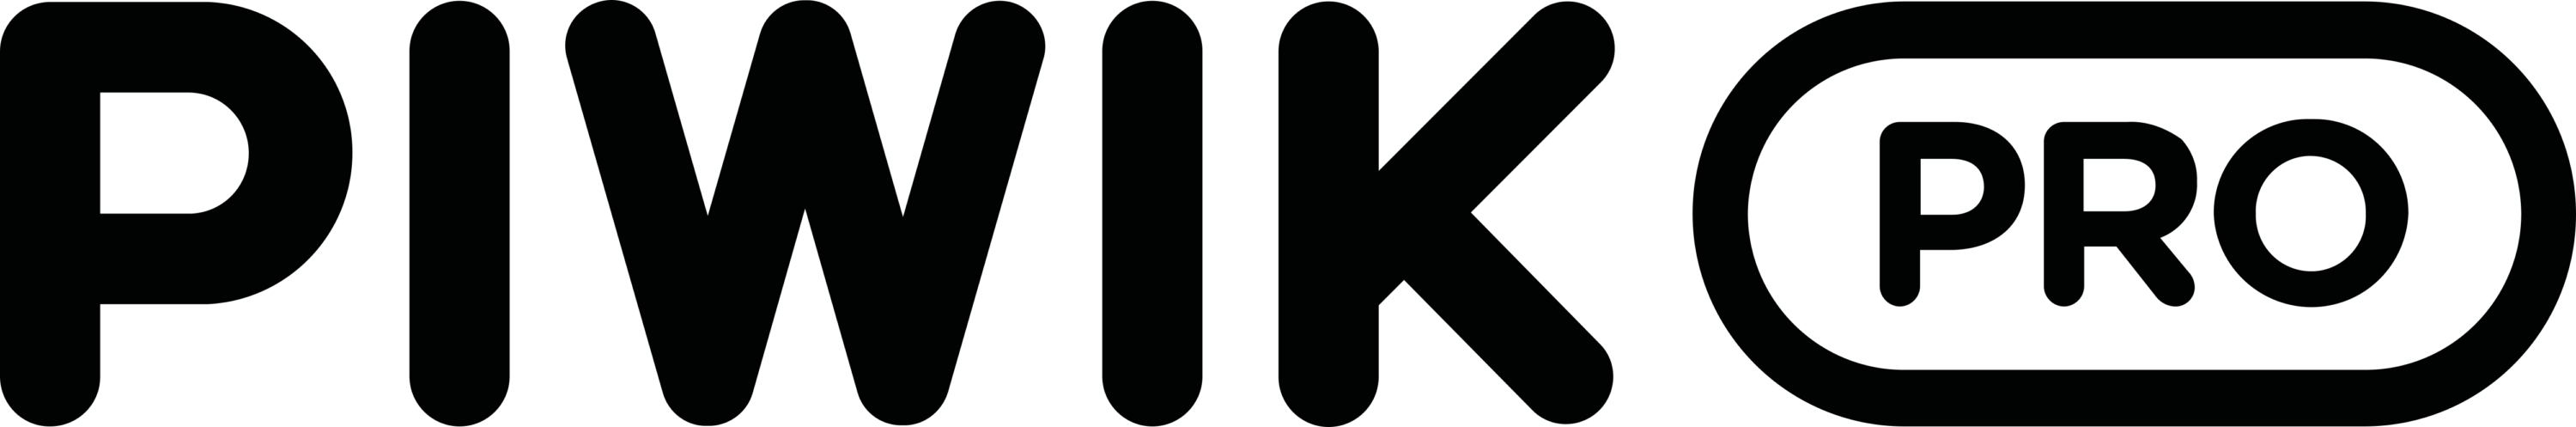 Piwik Pro Logo